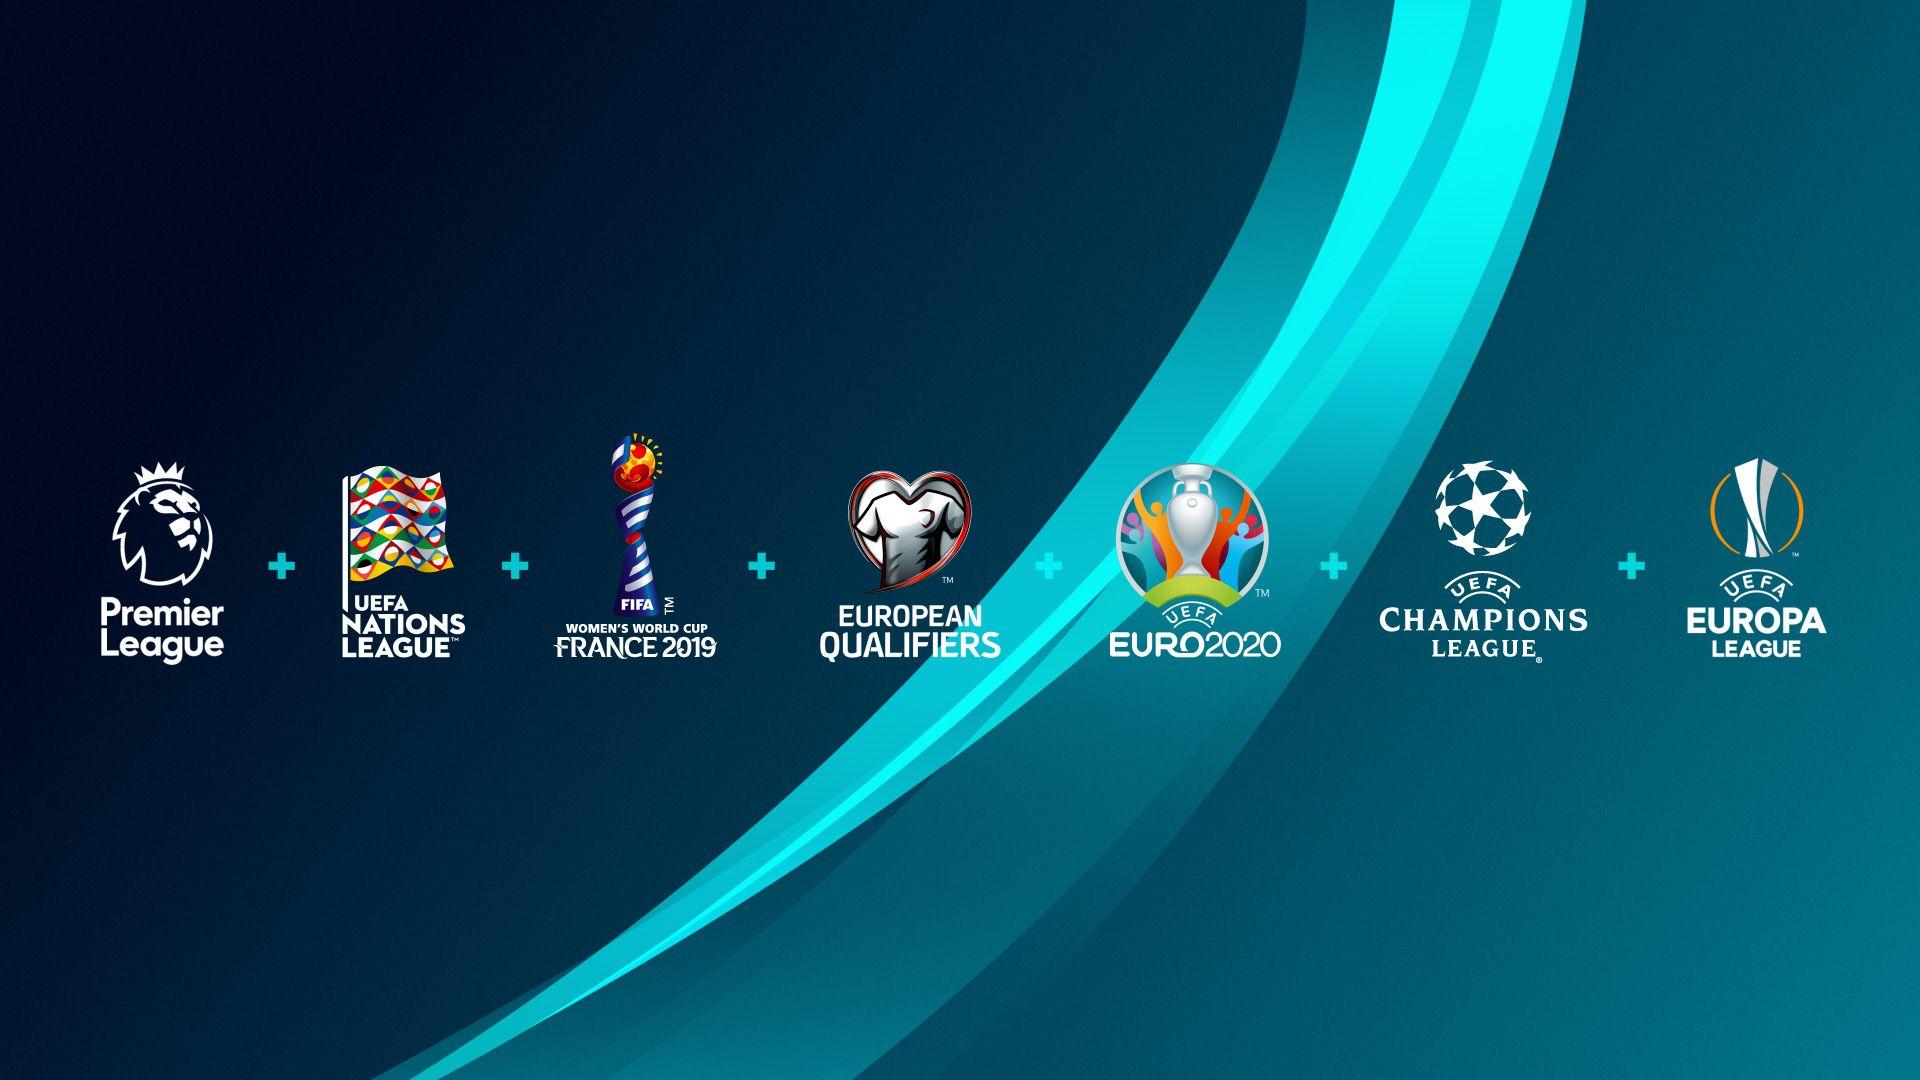 Optus Sport To Show UEFA Champions League, UEFA Super Cup